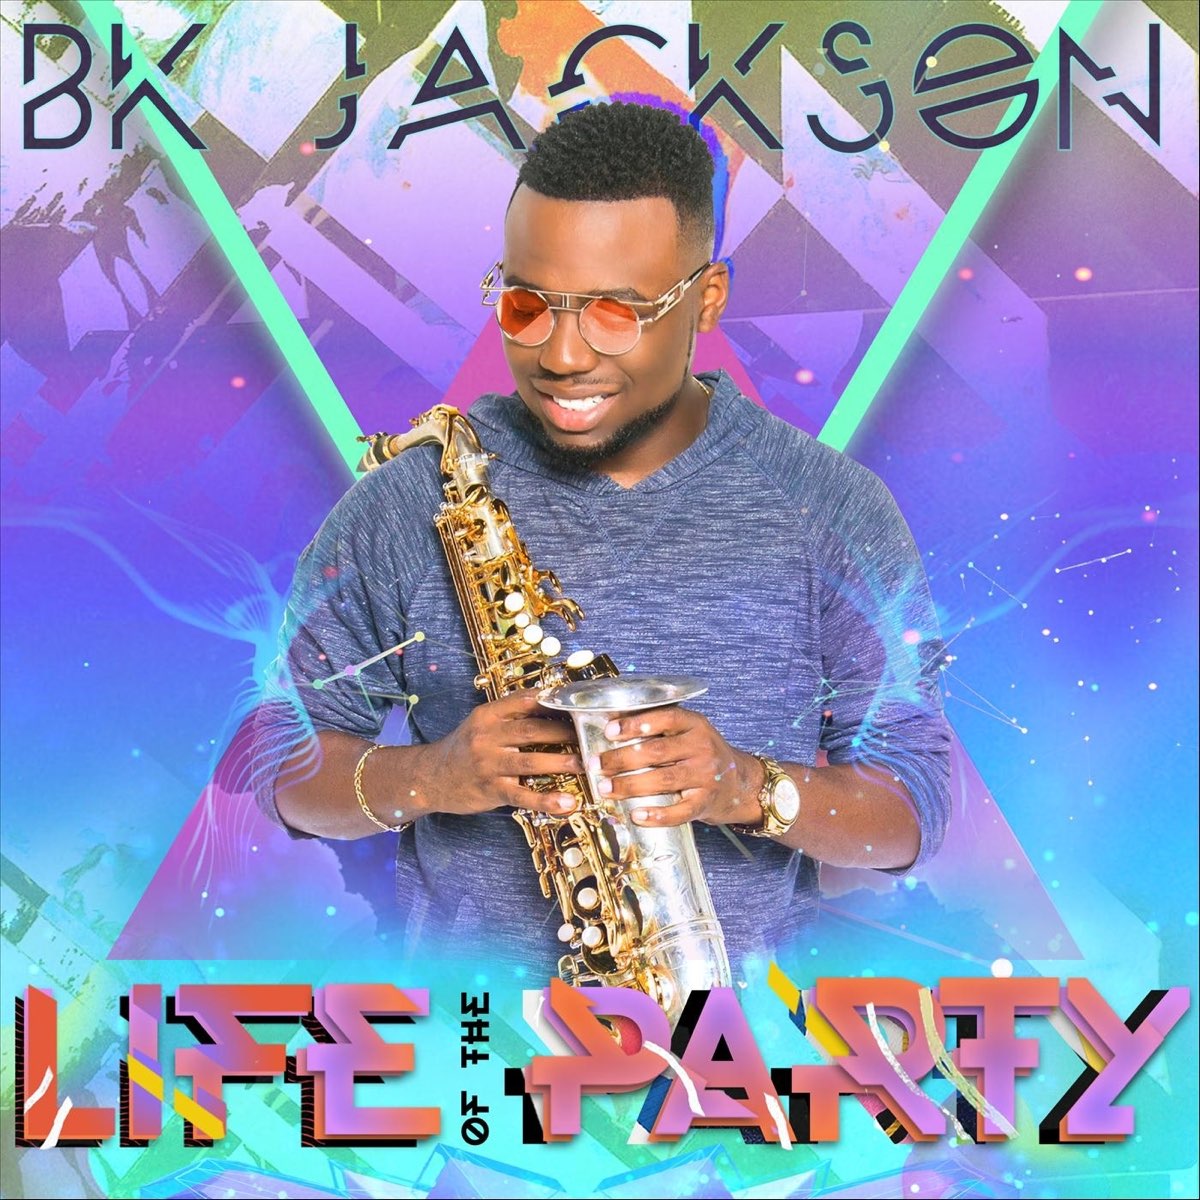 Джексон Сильвер. Moke Jackson Life. Trombone Shorty posters. BK Jackson ft. Nicholas Cole - Velvet Ropes. Bk party